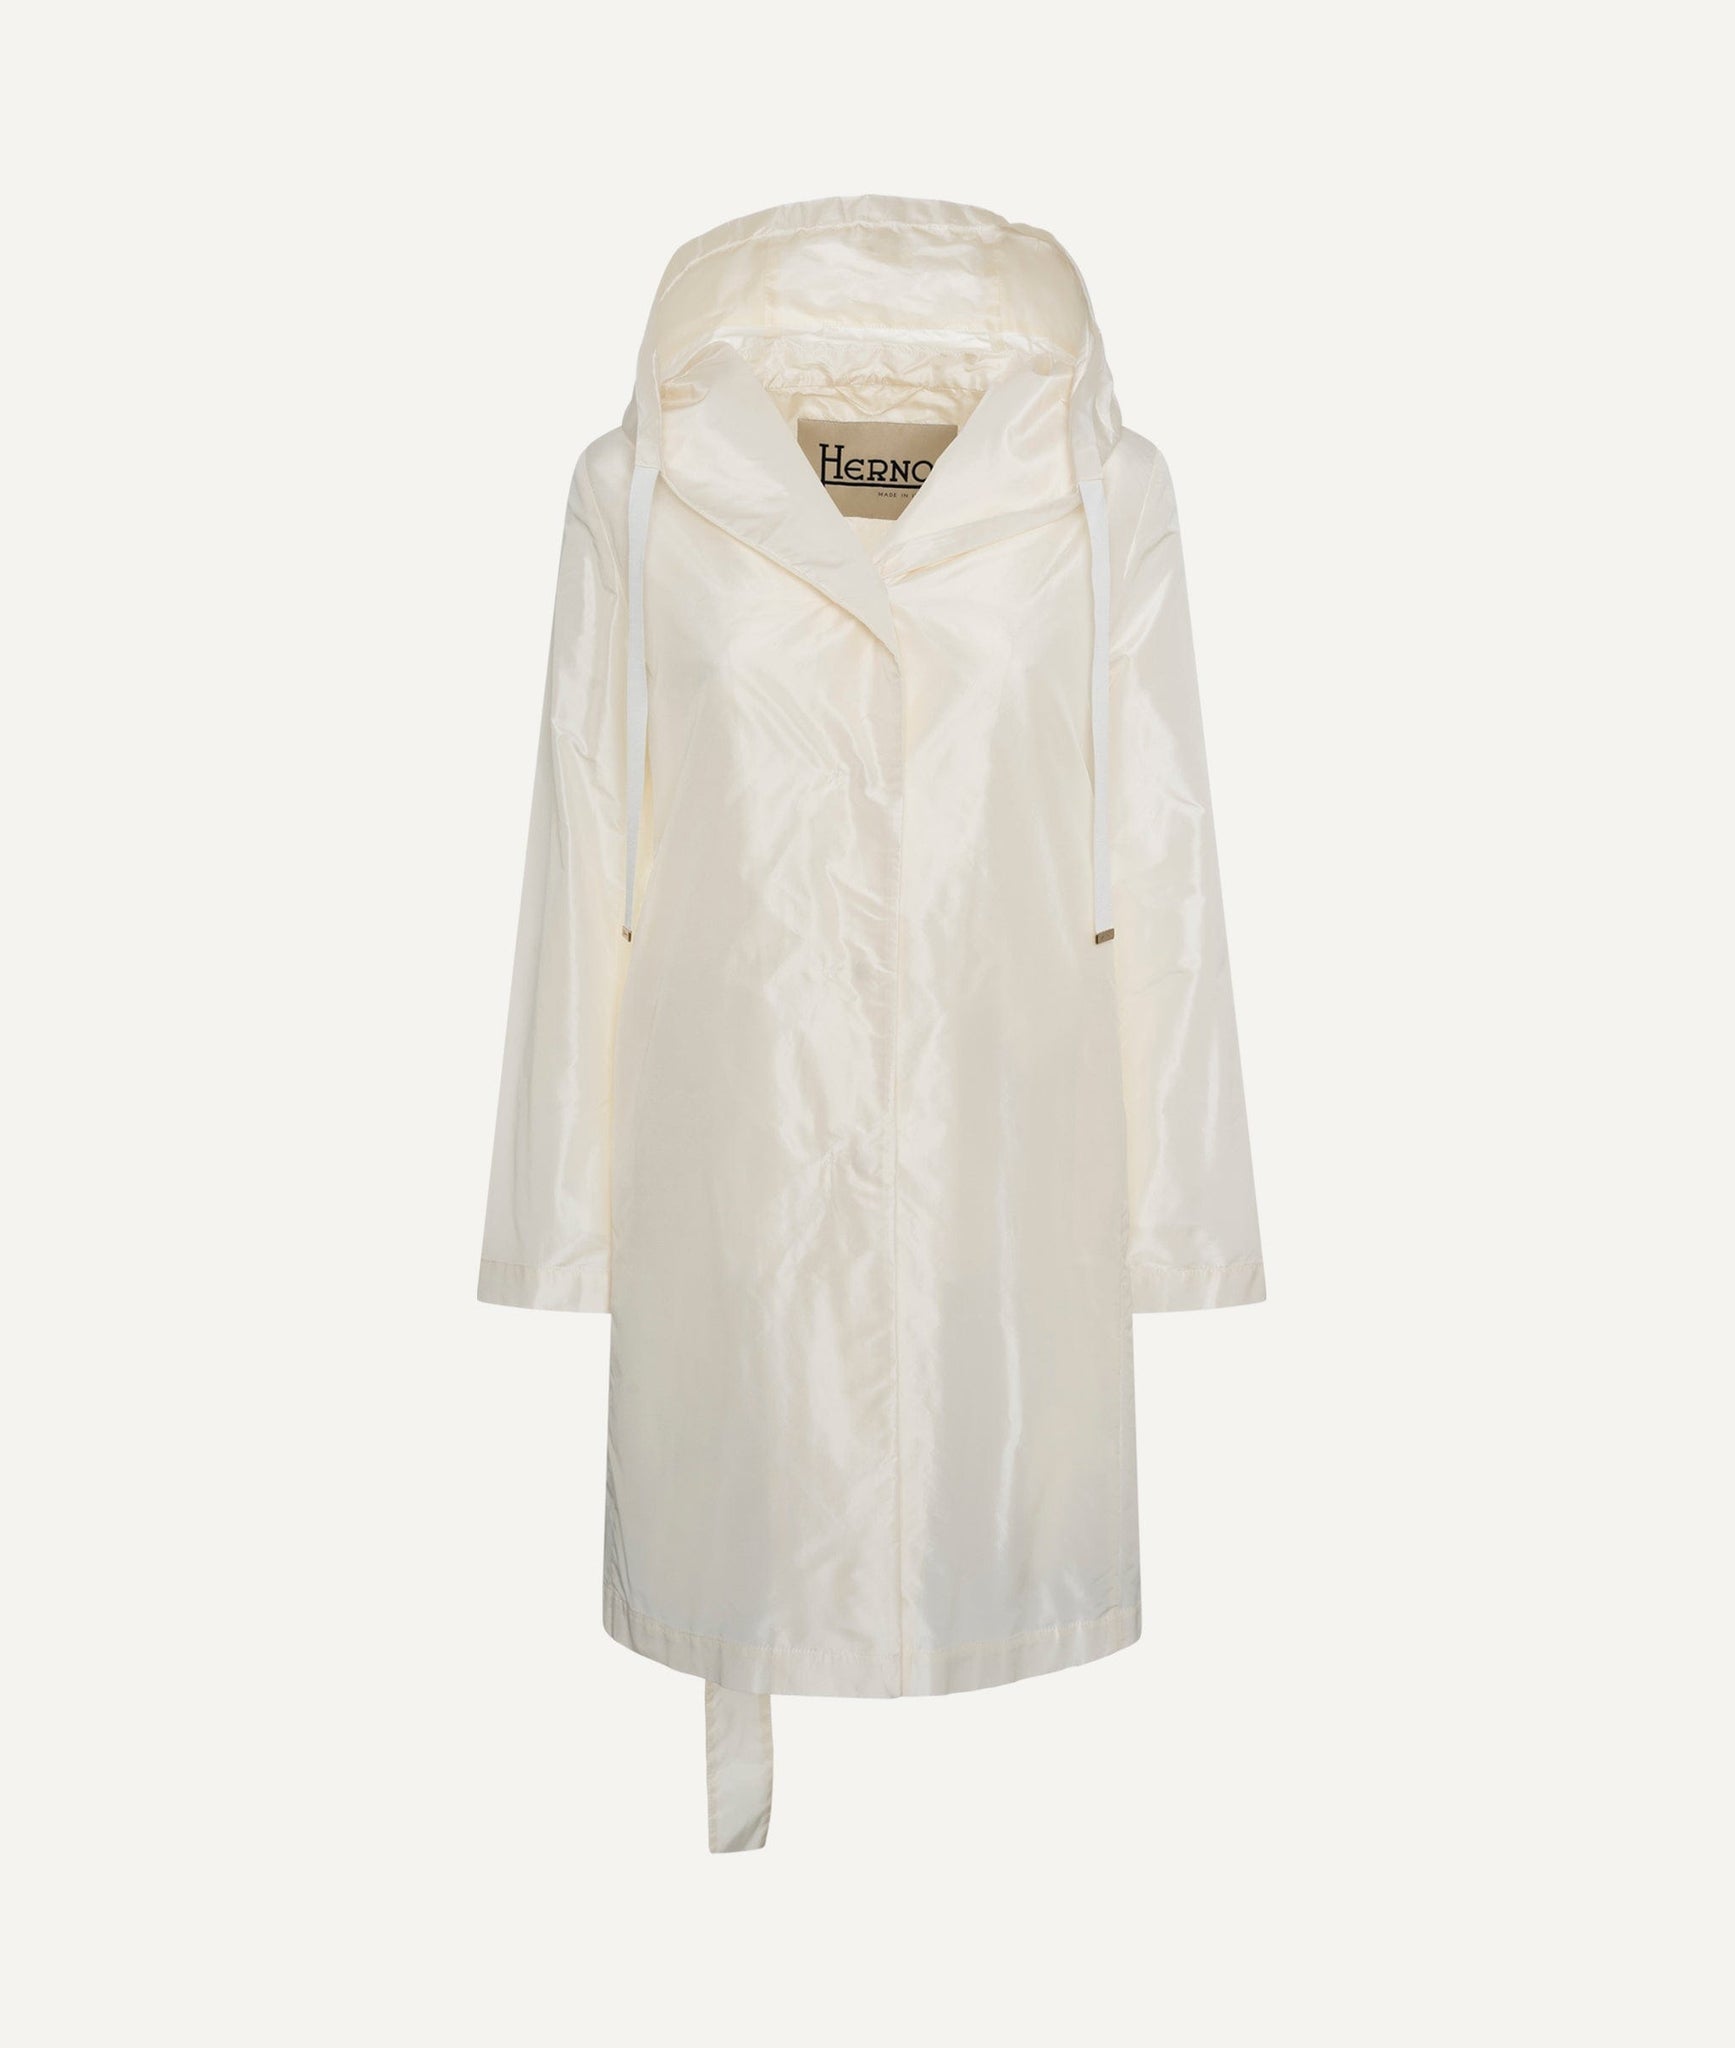 Herno - Field Jacket in Silk